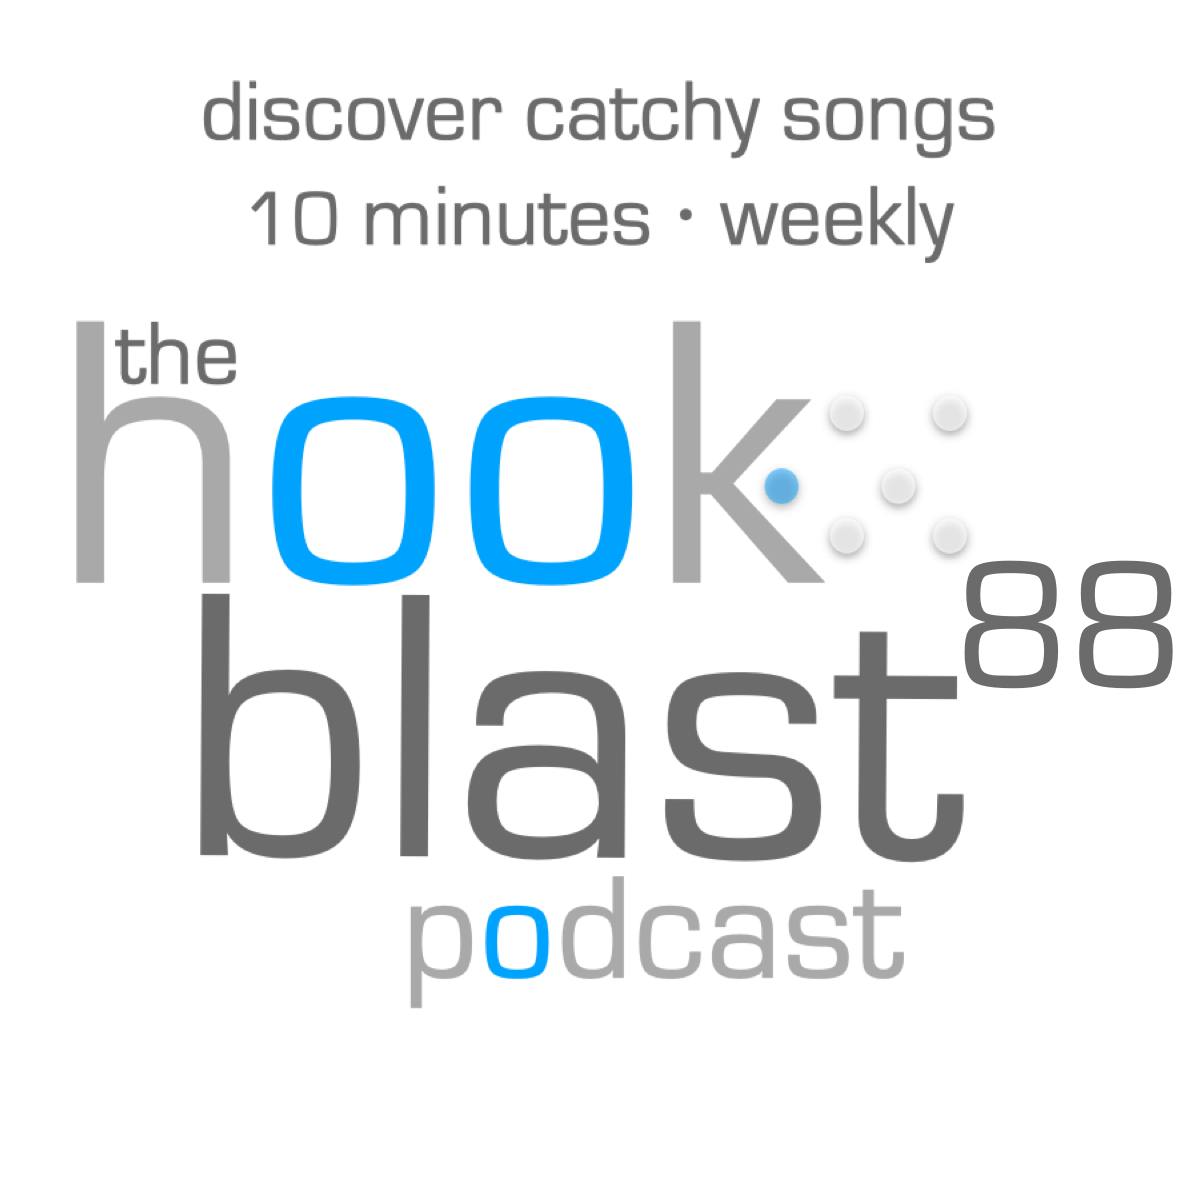 The Hookblast Podcast - Episode 88